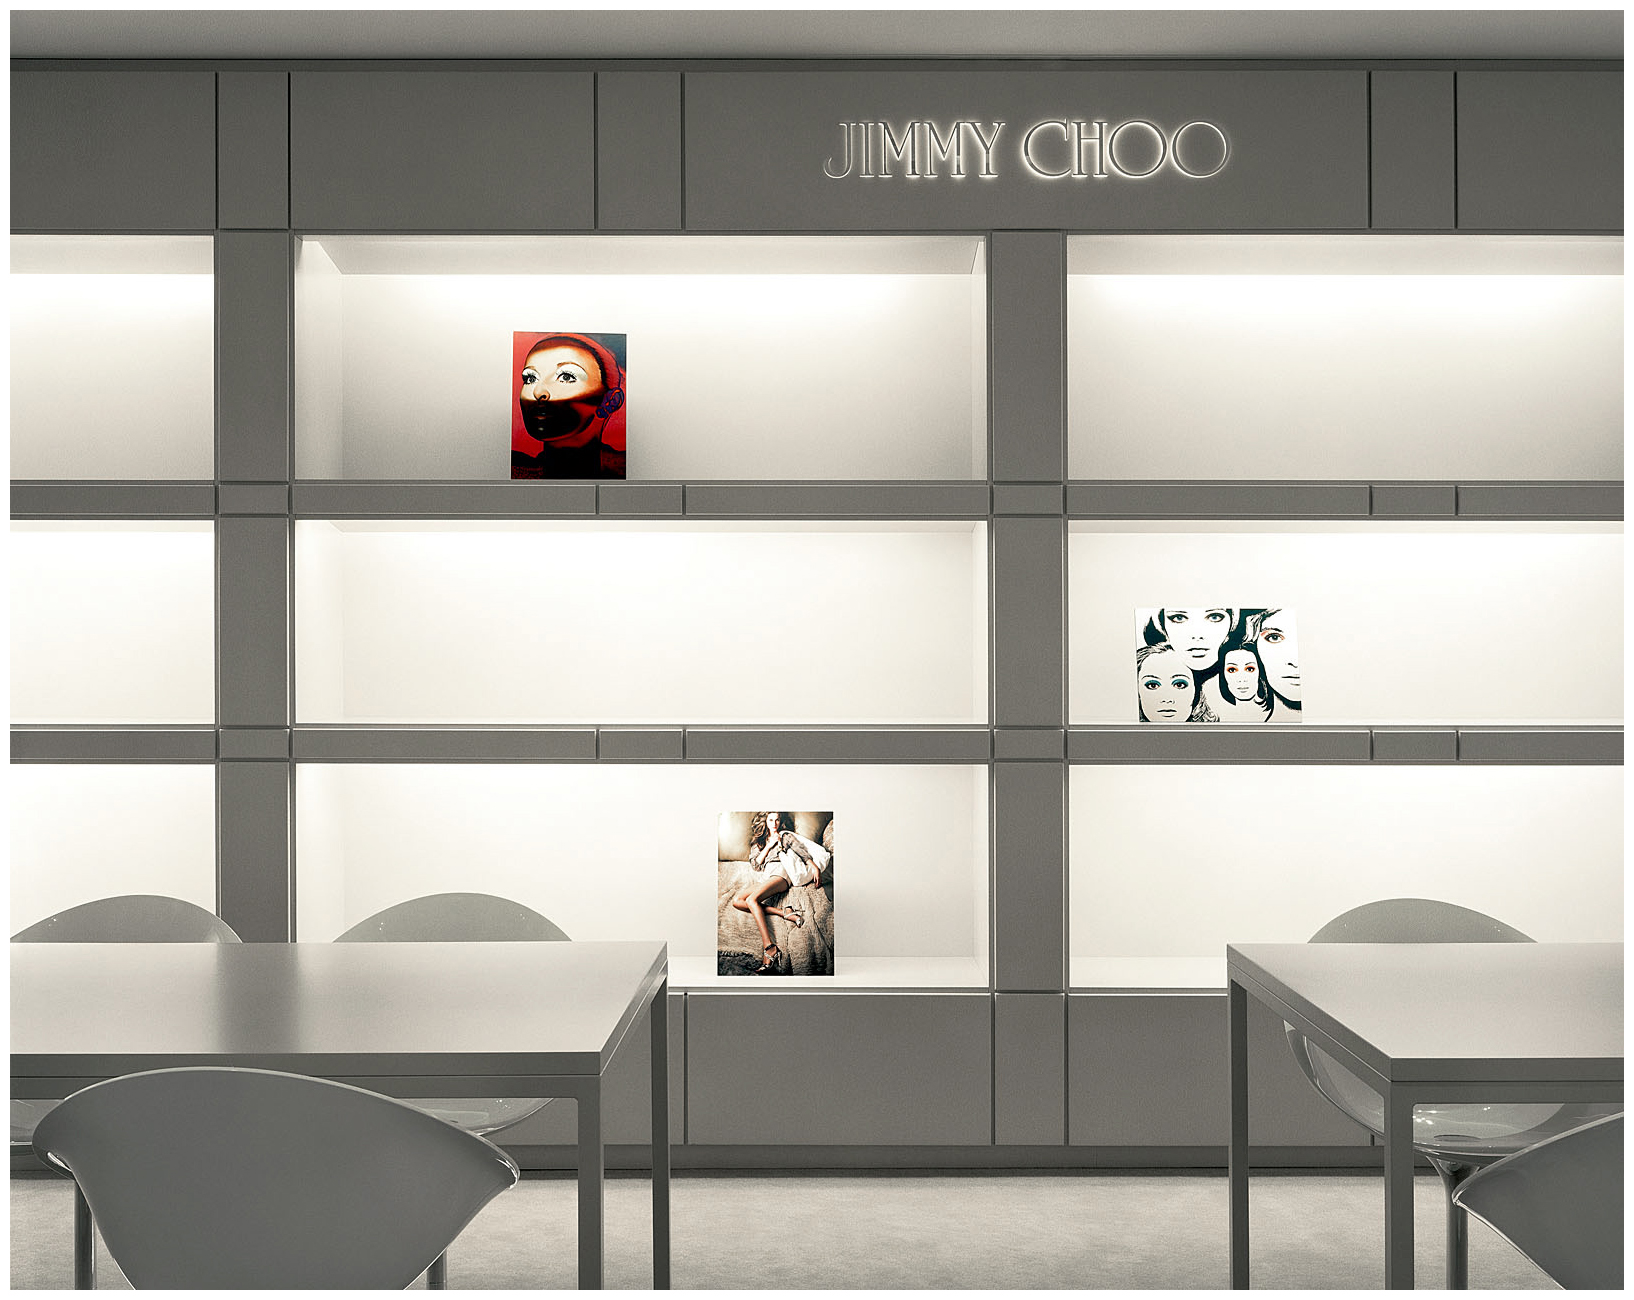 Jimmy Choo NYC HQ by Stylander DesignGroup www.stylander.com